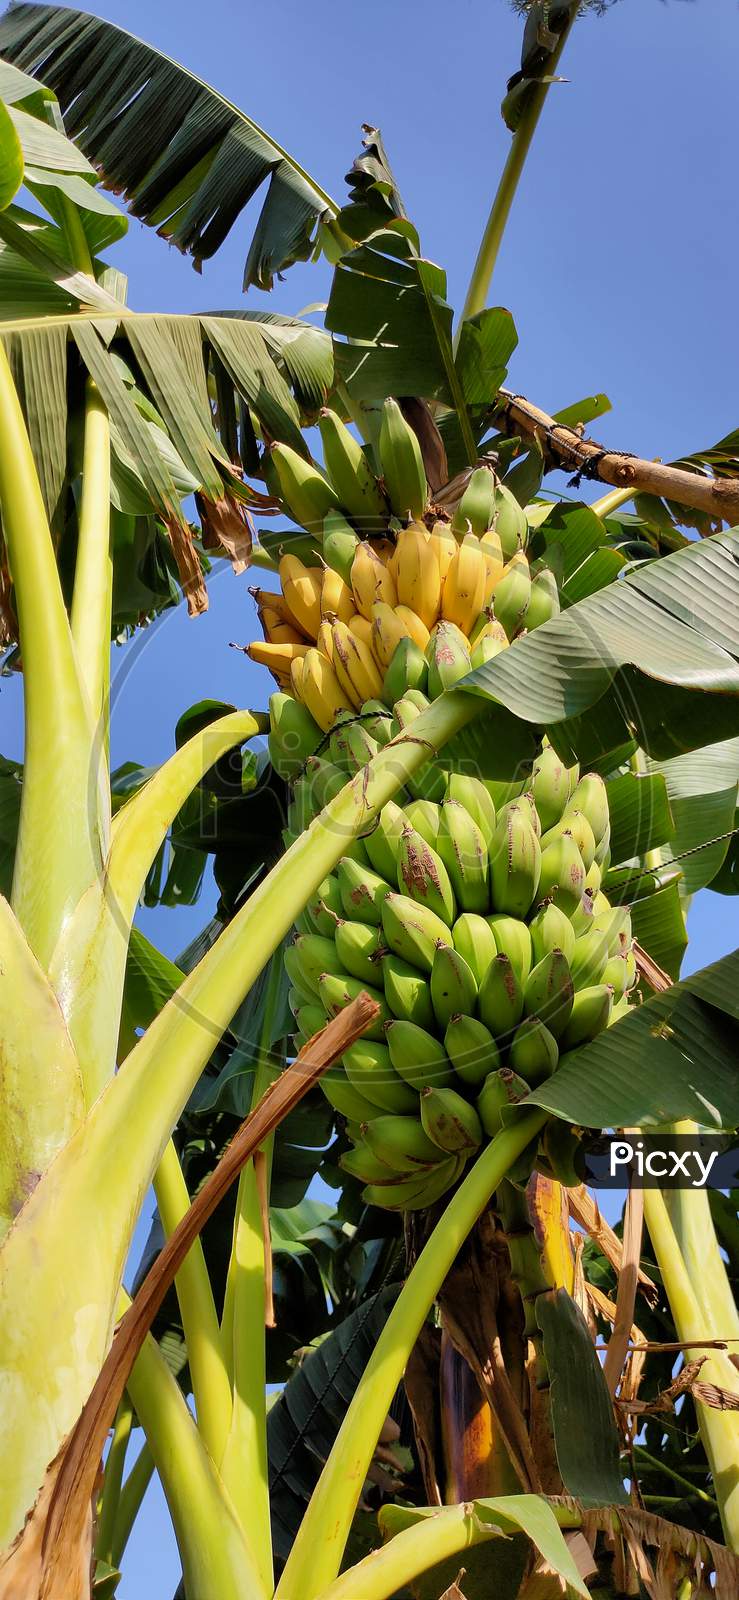 Growing Bananas On the Tree